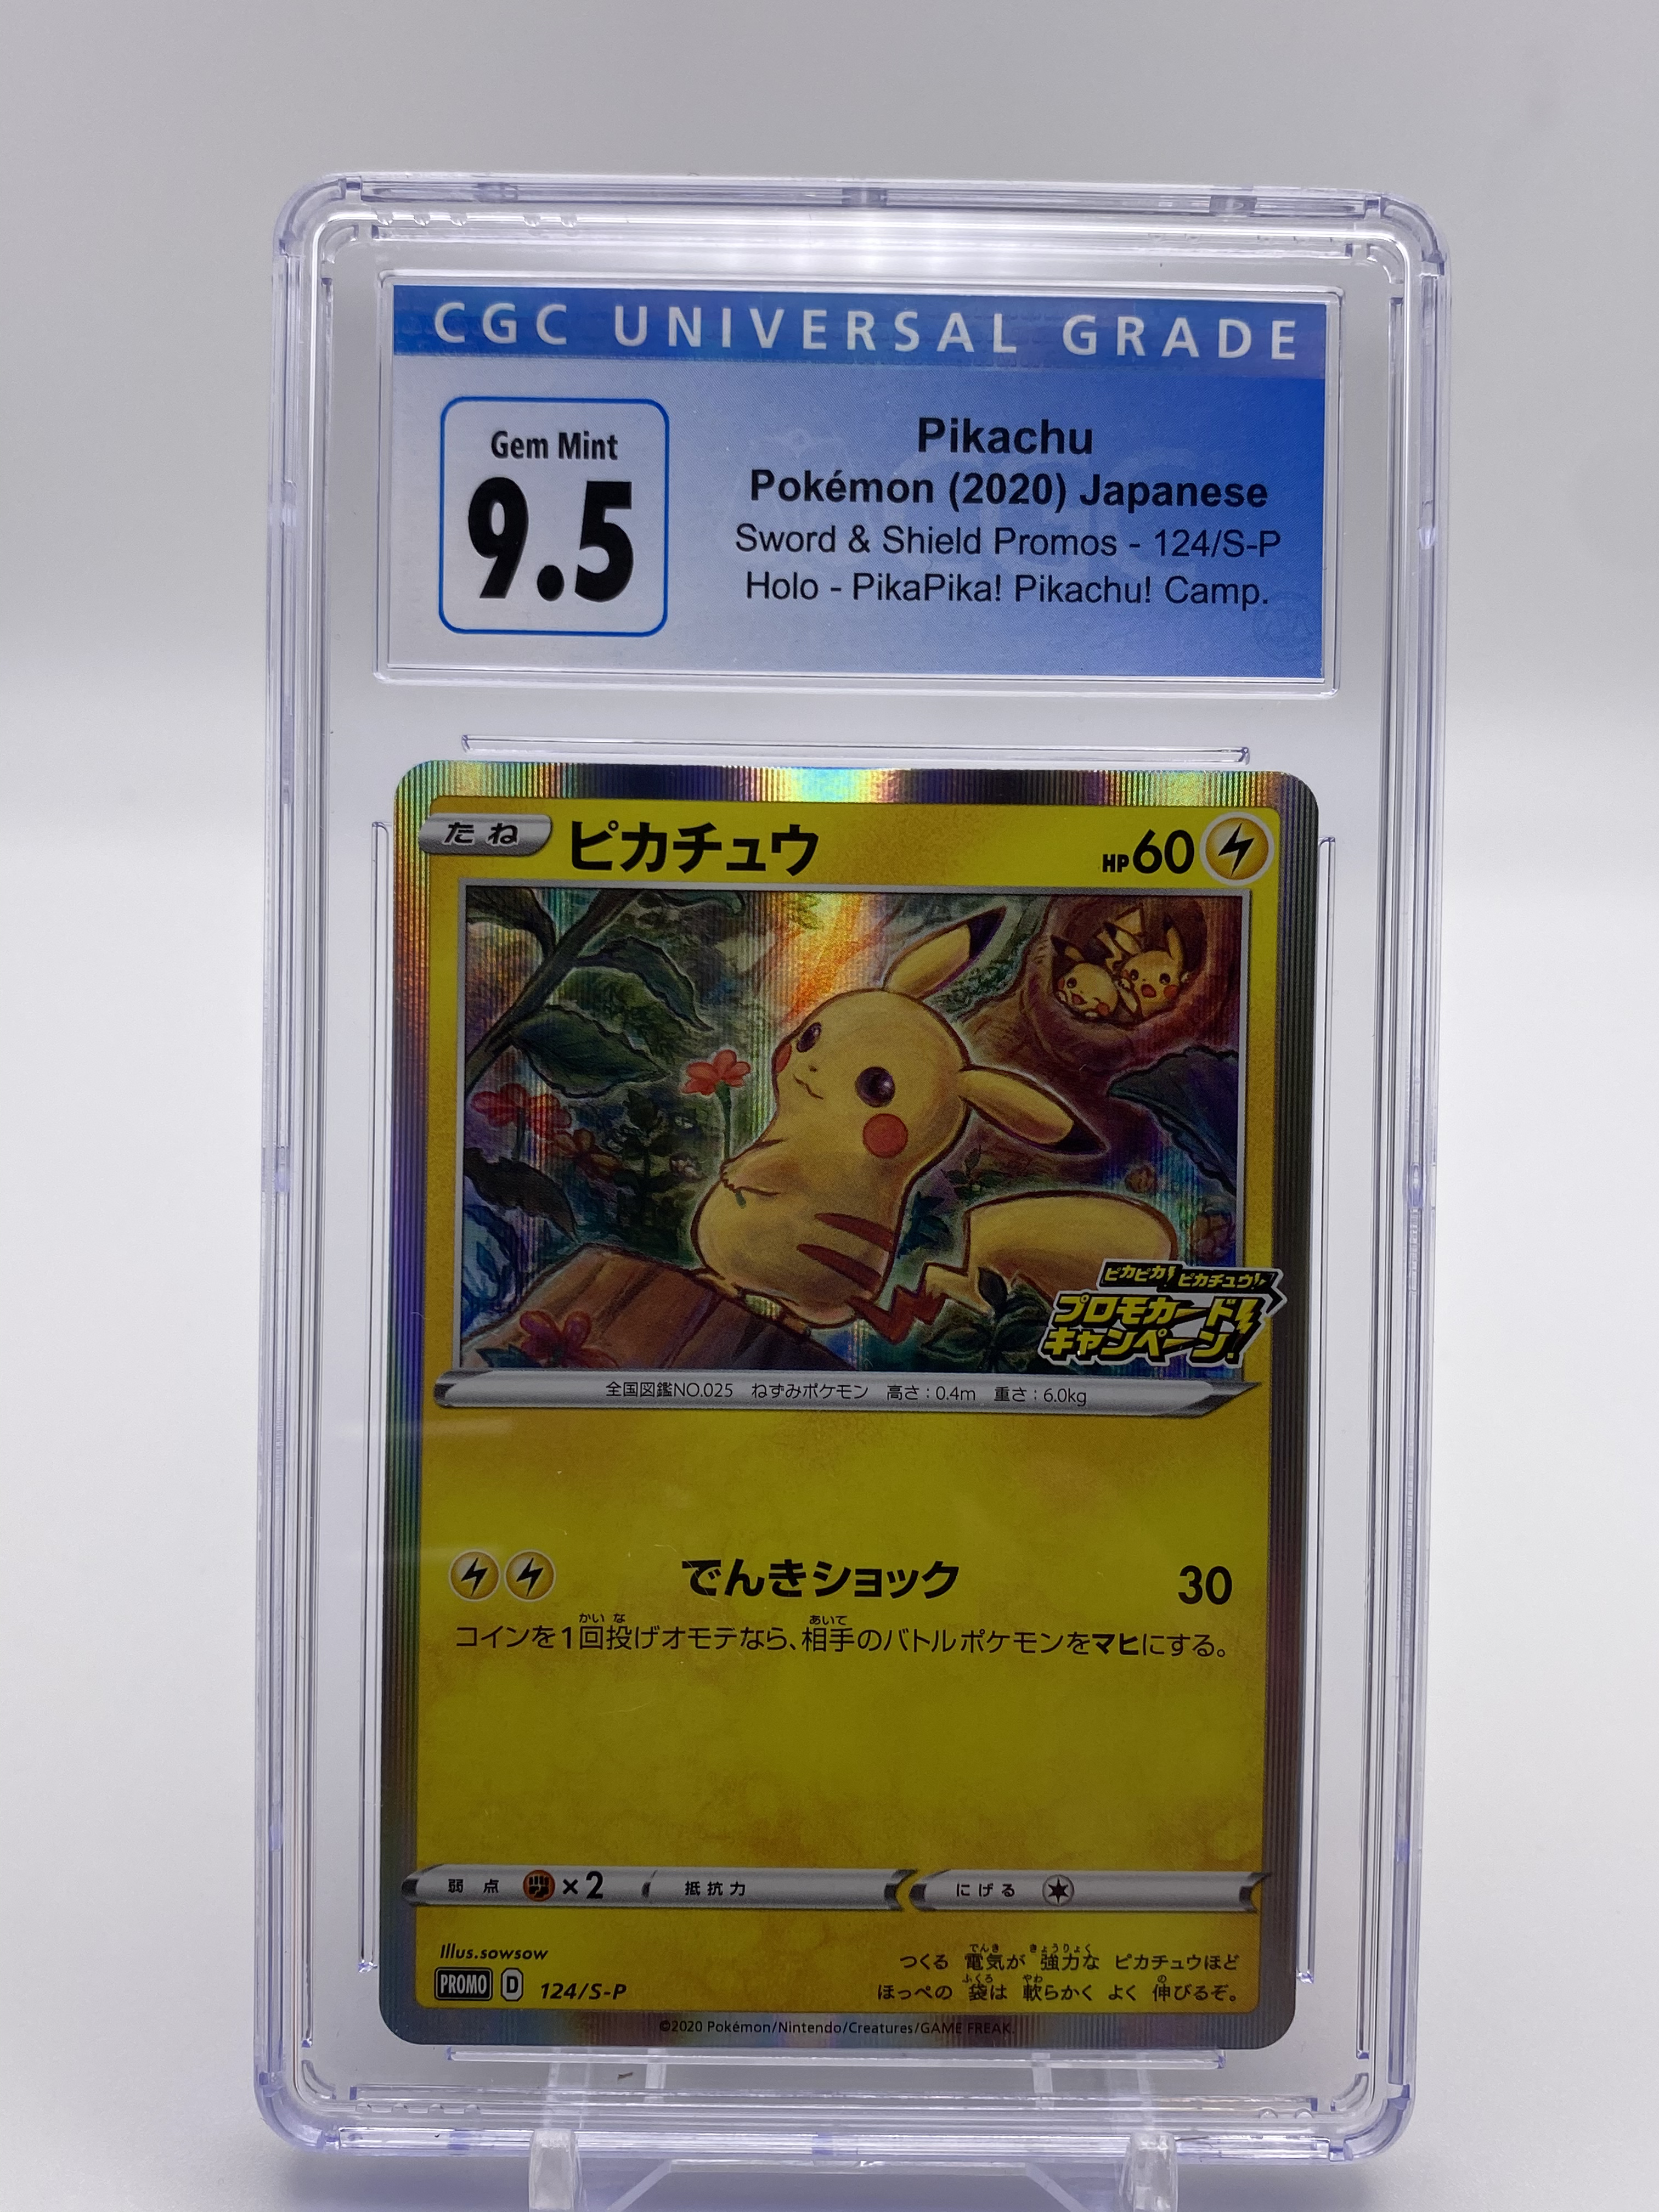 CGC 9.5 Pikachu & Zekrom GX Alt Art Promo (Graded Card) – Phurion's Pokemon